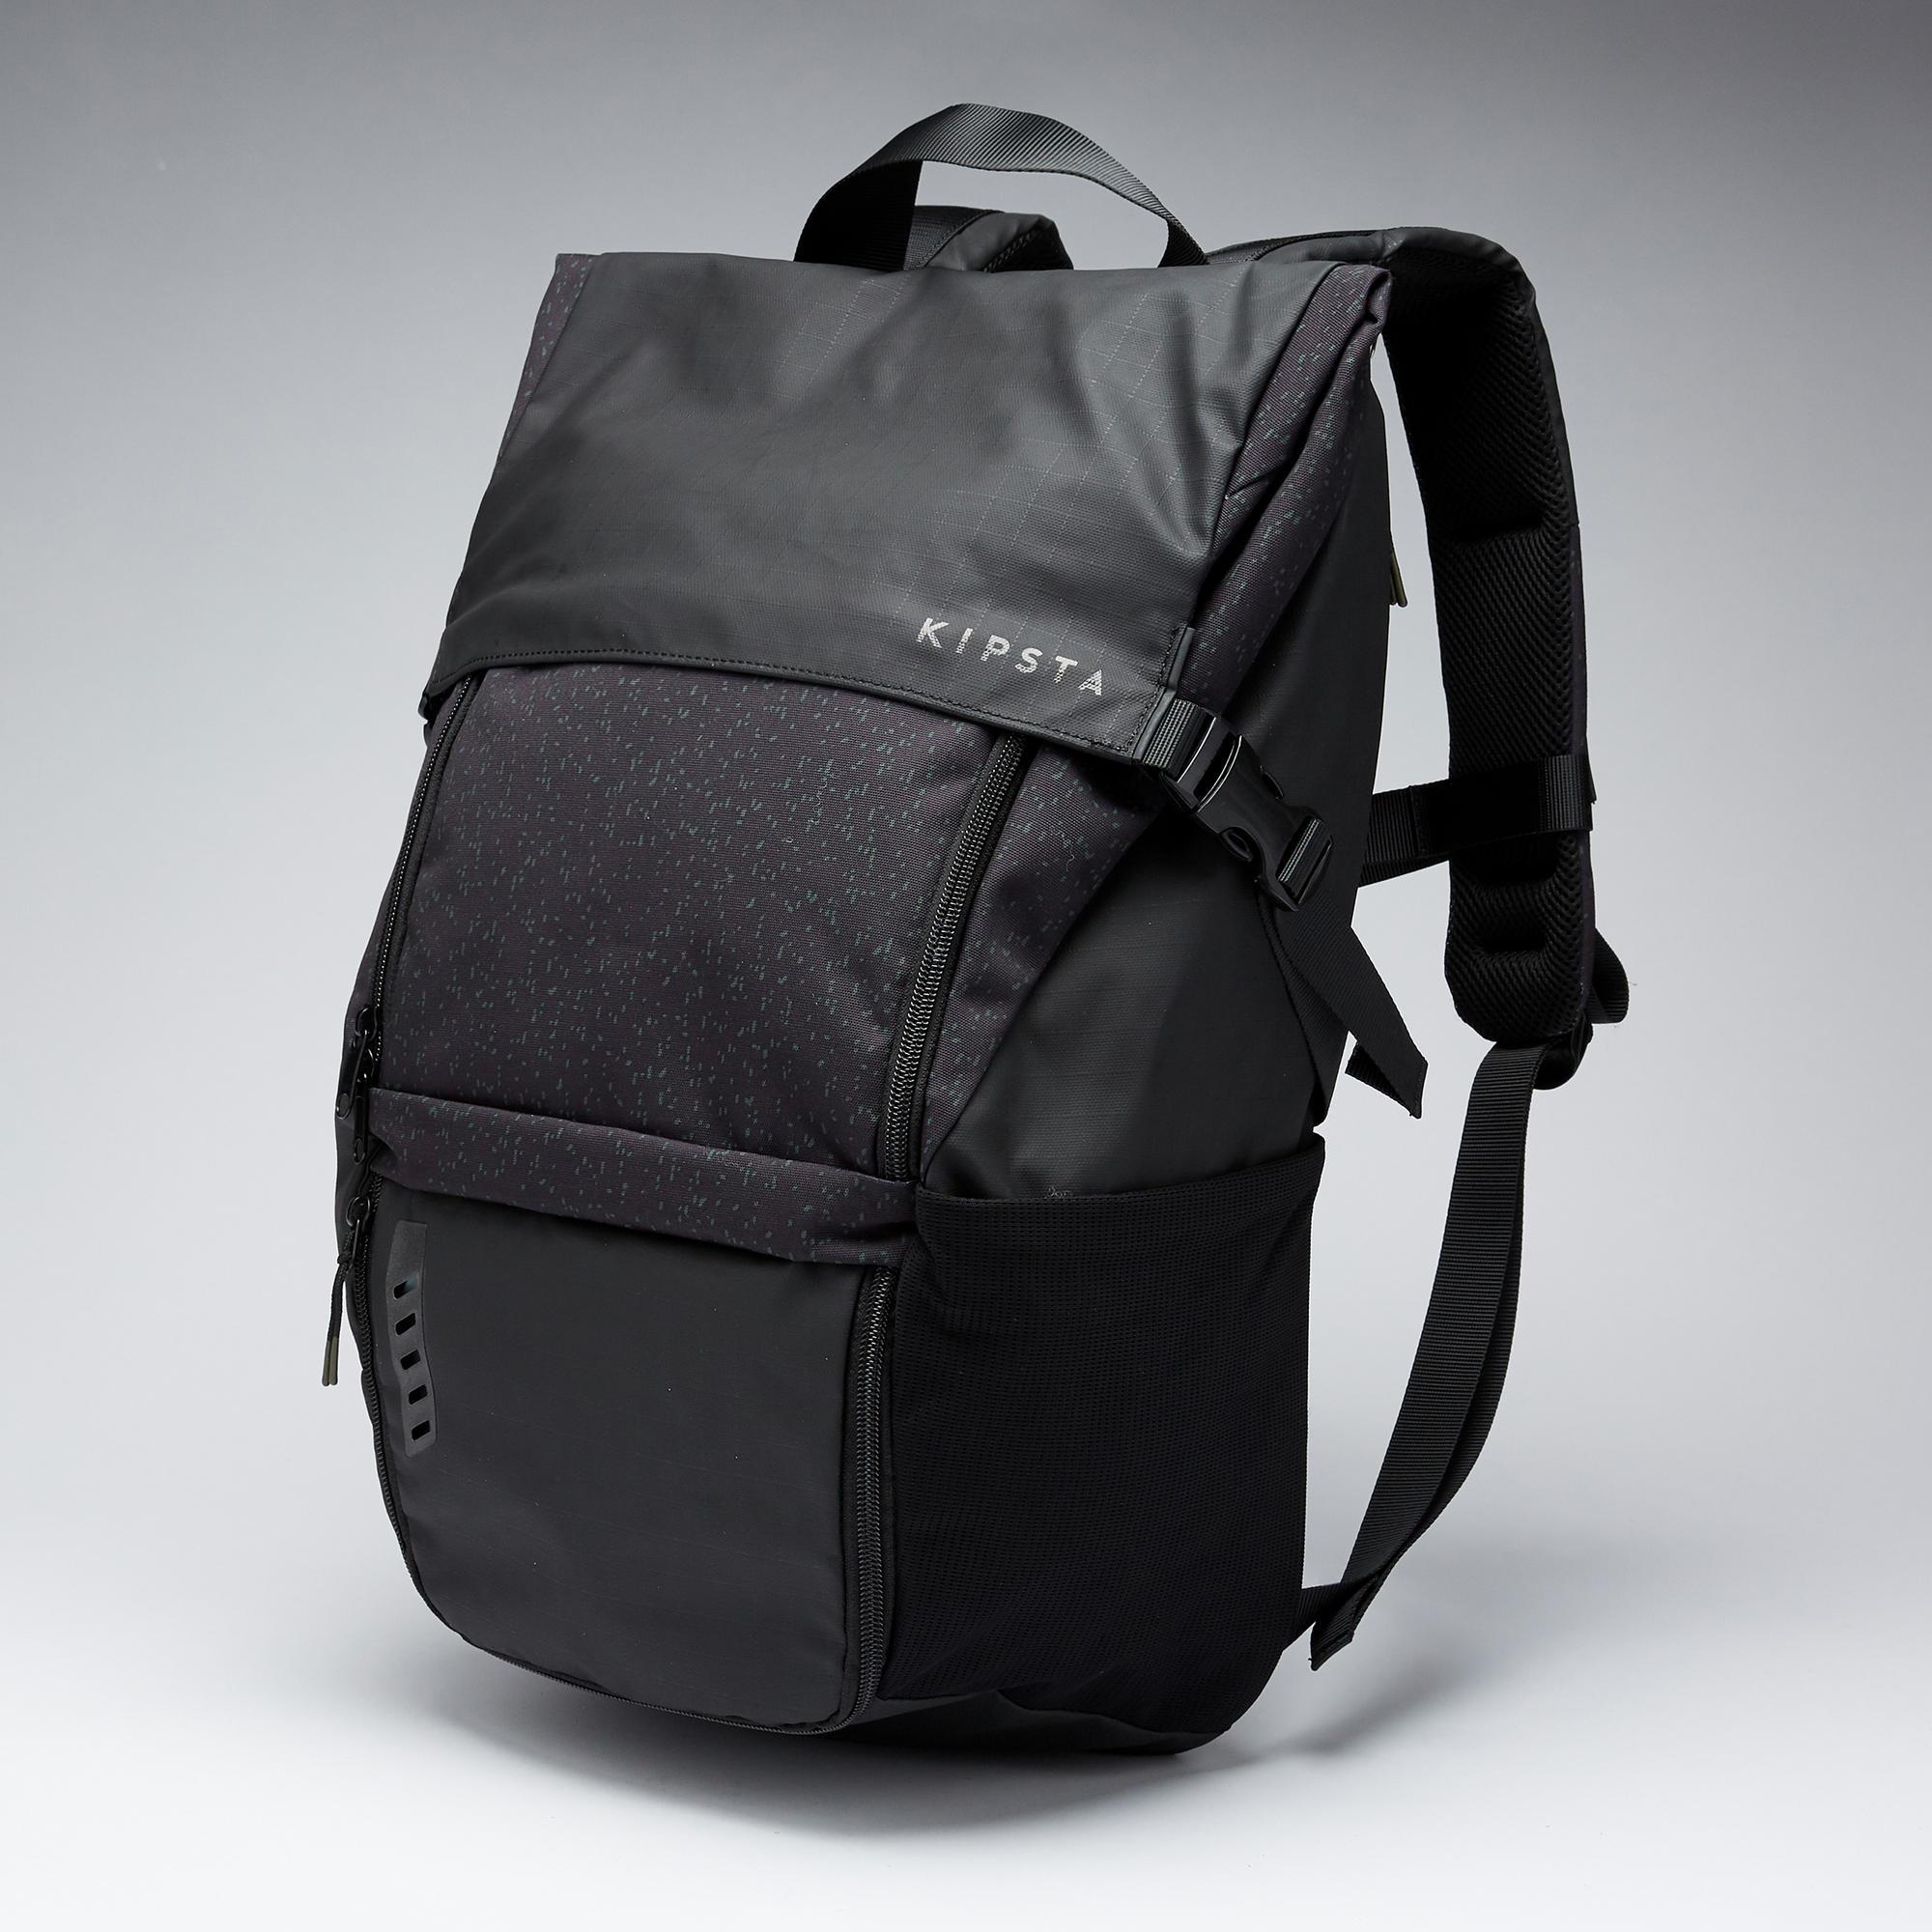 decathlon 25l backpack